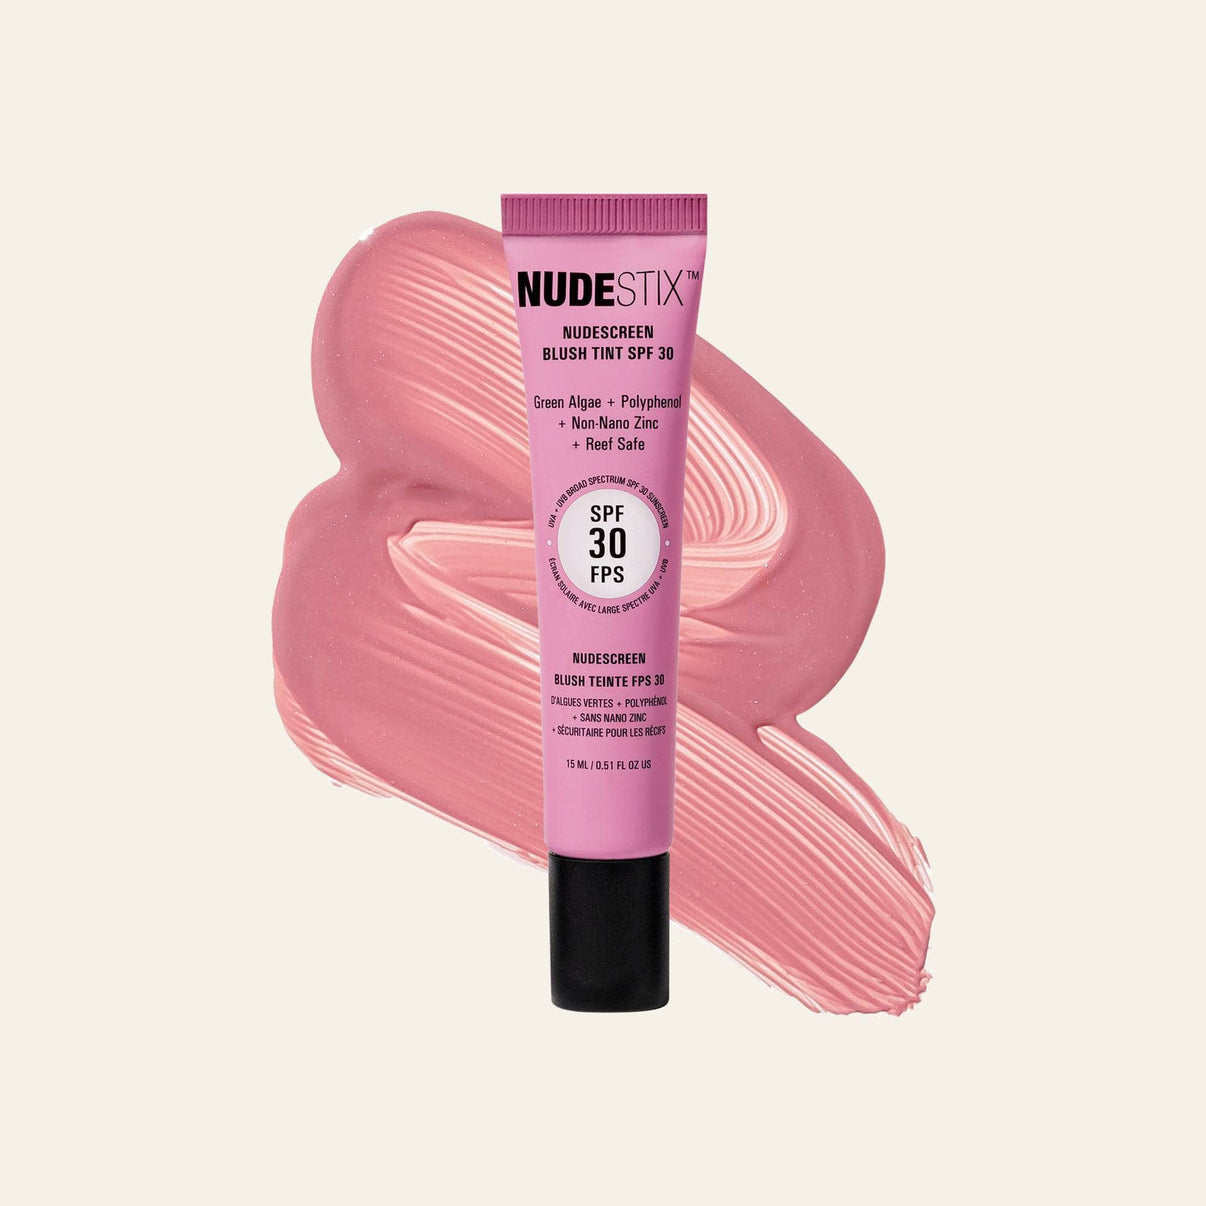 Nudescreen Blush Tint in shade SUNSET ROSE - 1